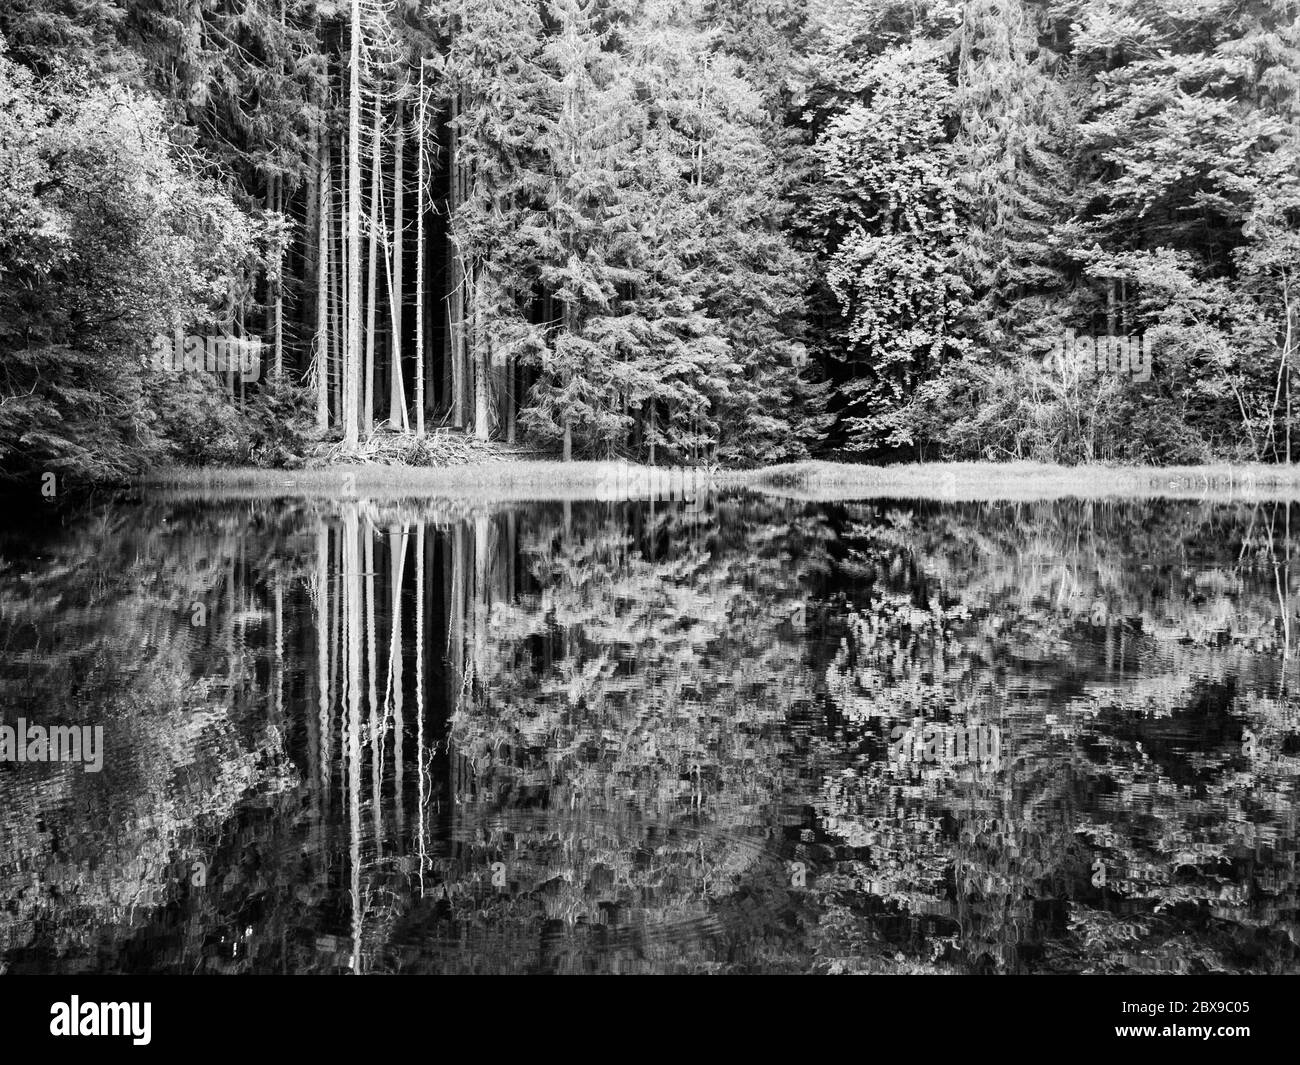 Boubin lake. Reflection of lush green trees of Boubin Primeval Forest, Sumava Mountains, Czech Republic. Black and white image. Stock Photo